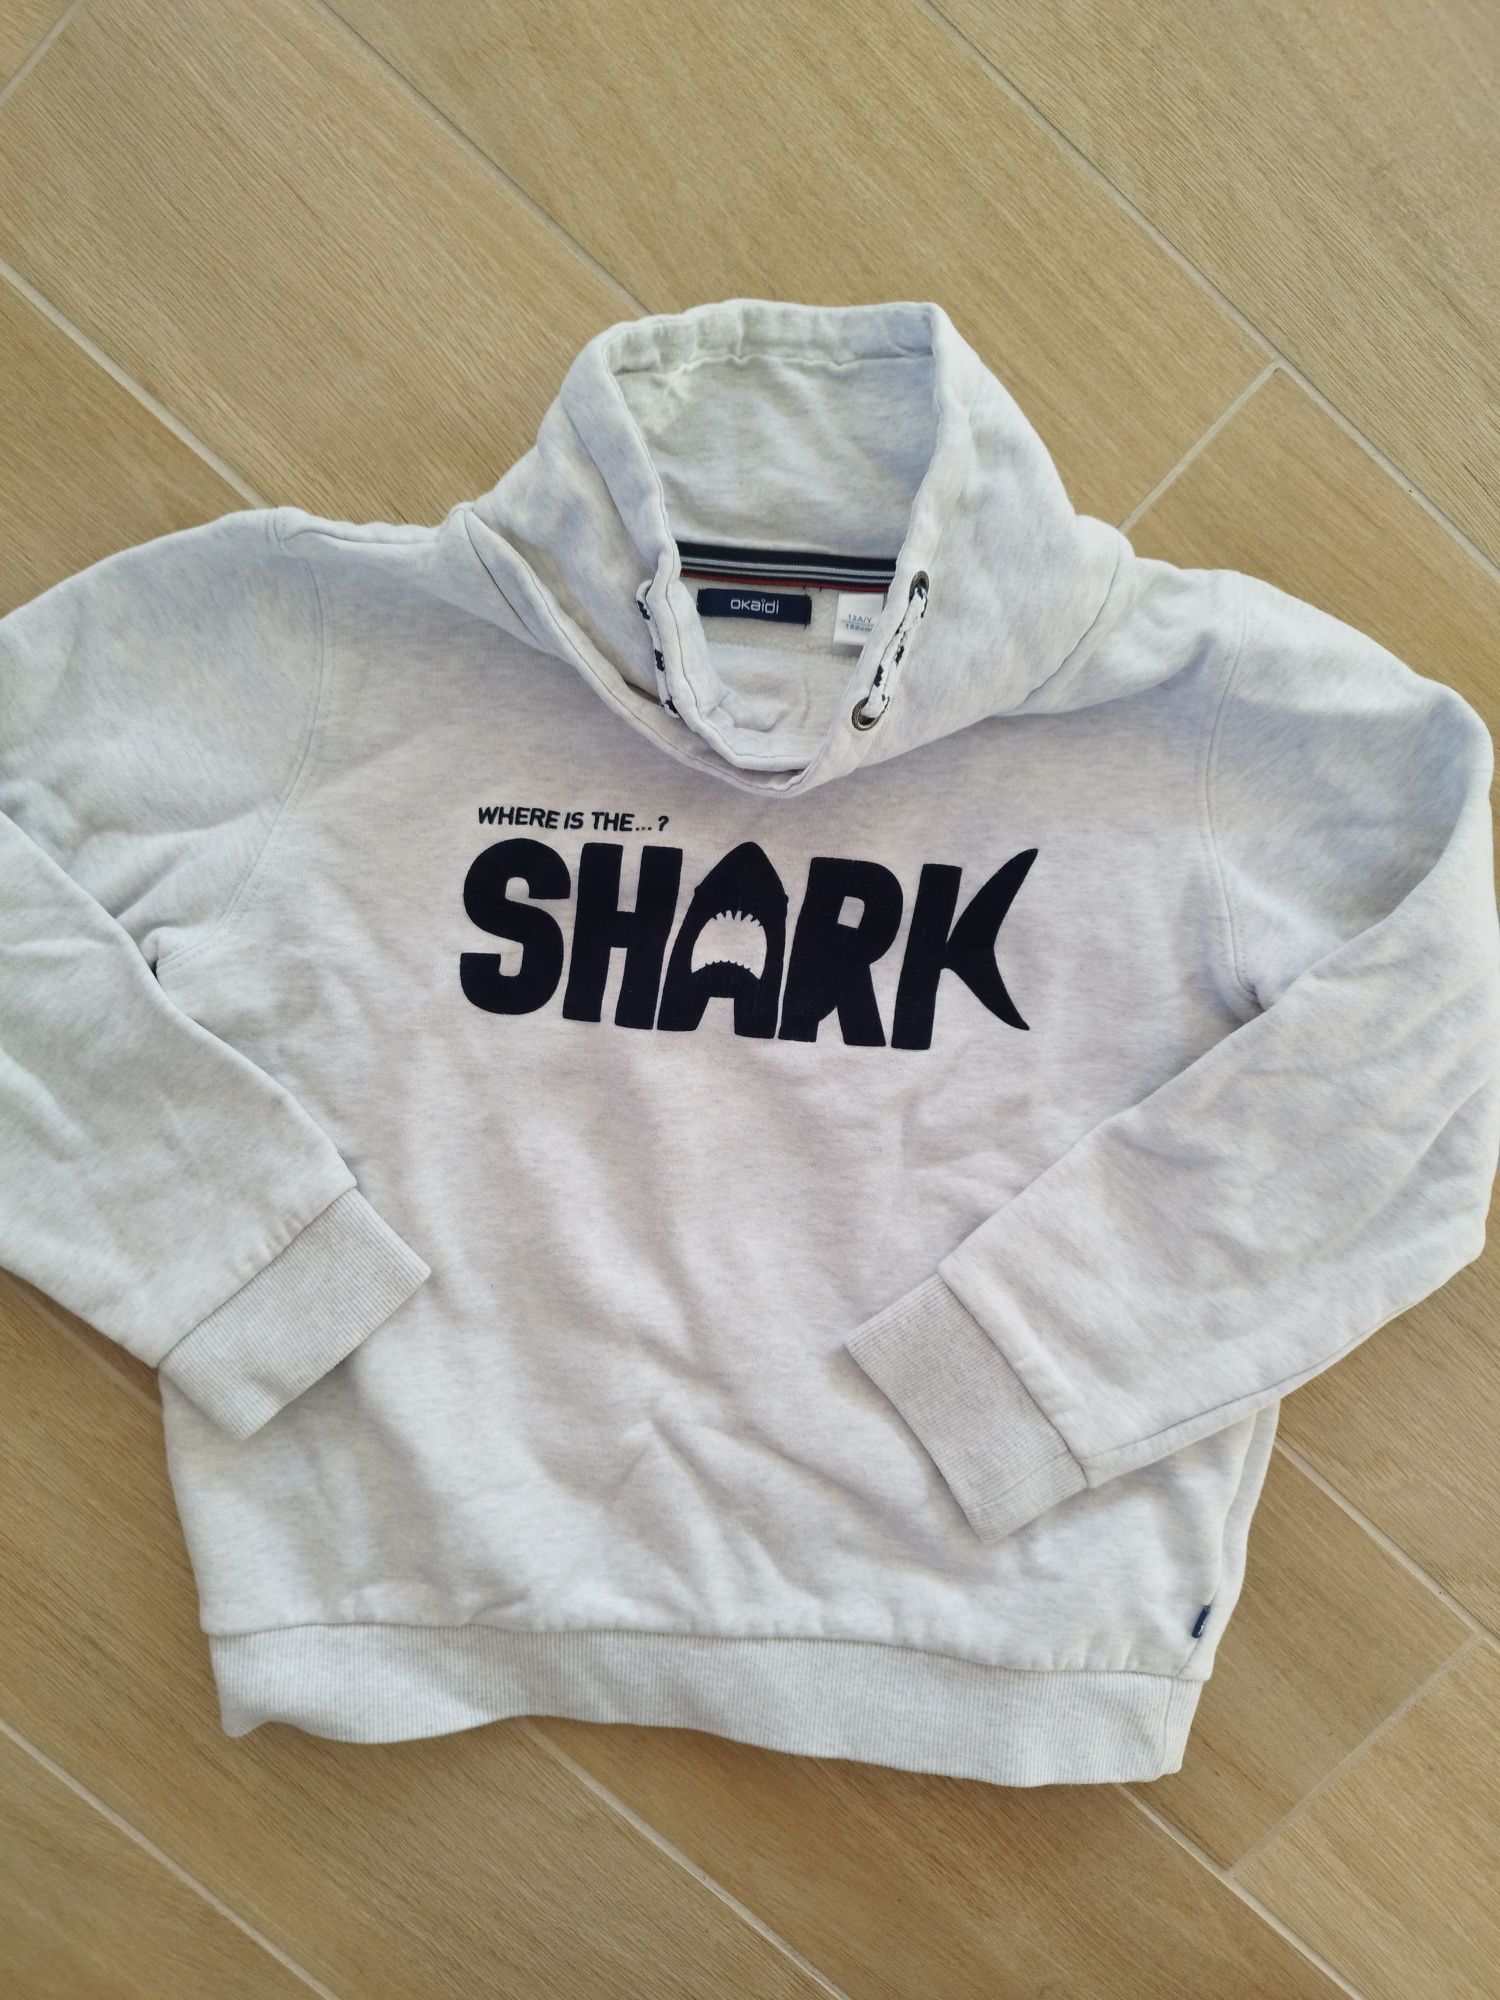 Bluza dla chłopca shark okaidi